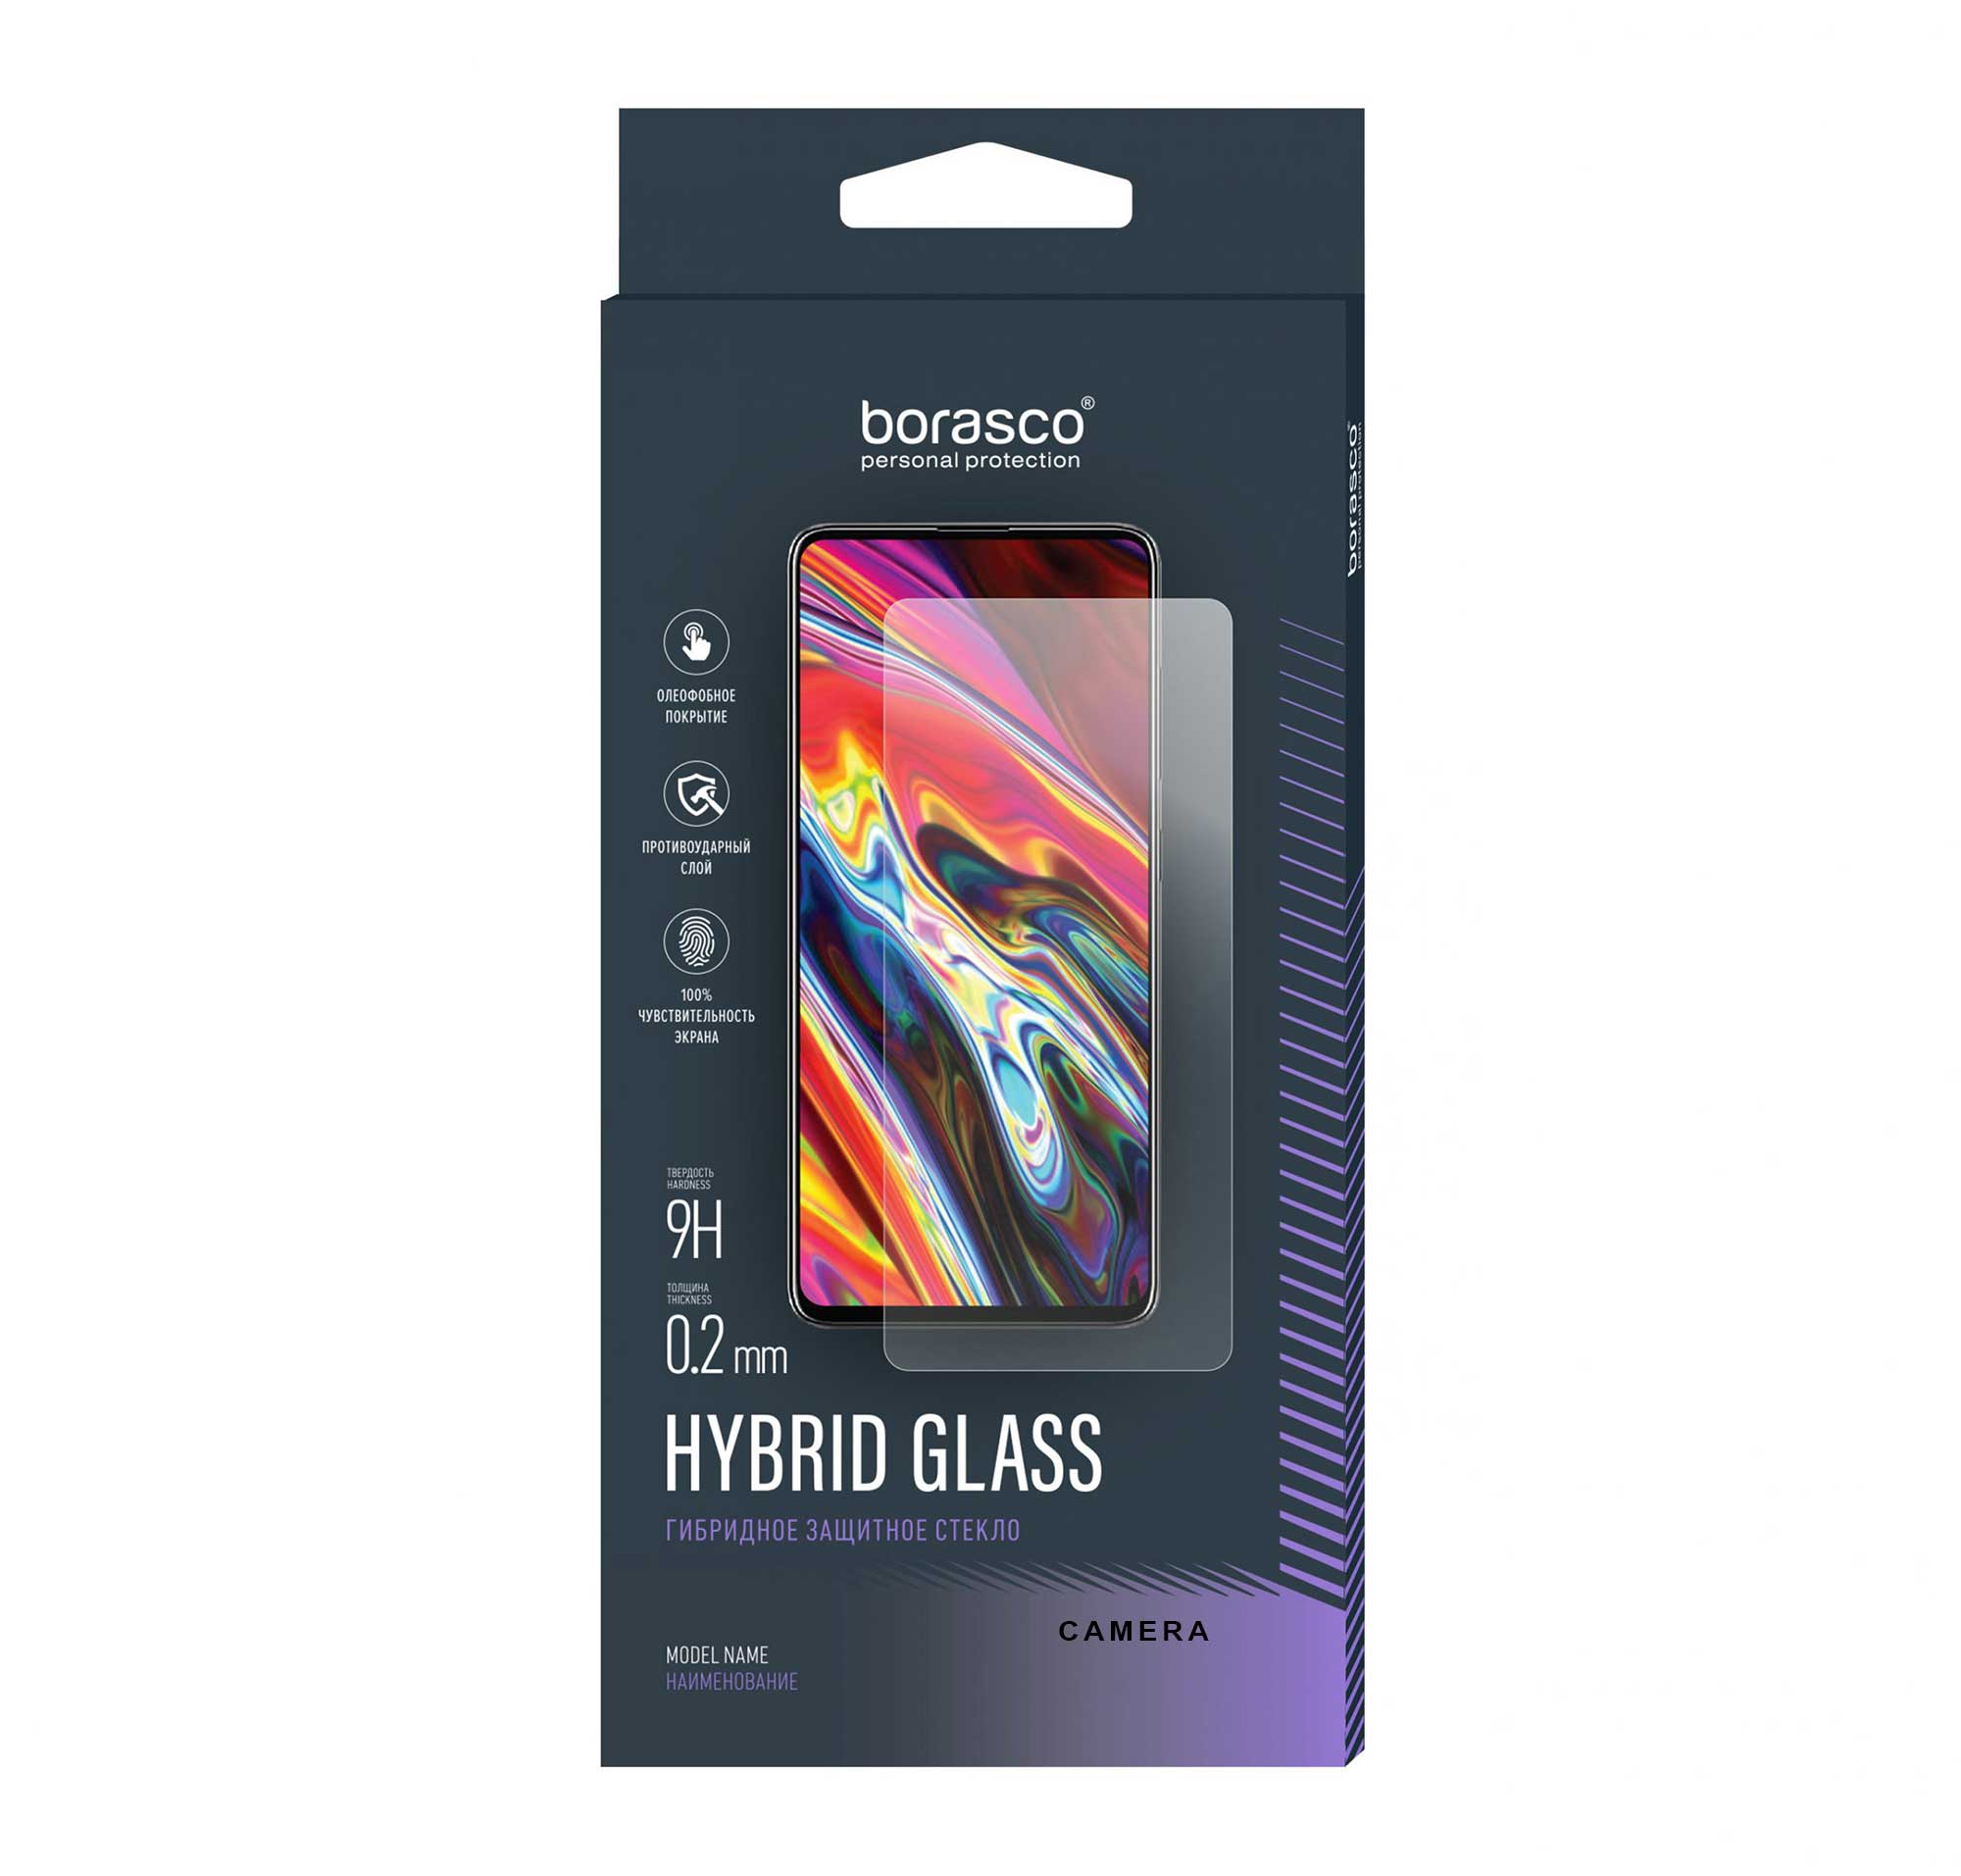 Защитное стекло (Экран+Камера) Hybrid Glass для Xiaomi Poco X3/ Poco X3 Pro защита для экрана poco x3 nfc стекло poco x3 pro закаленное стекло защитная пленка для телефона для xiaomi poco f3 x3 f2 m3 pro 5g x3 gt